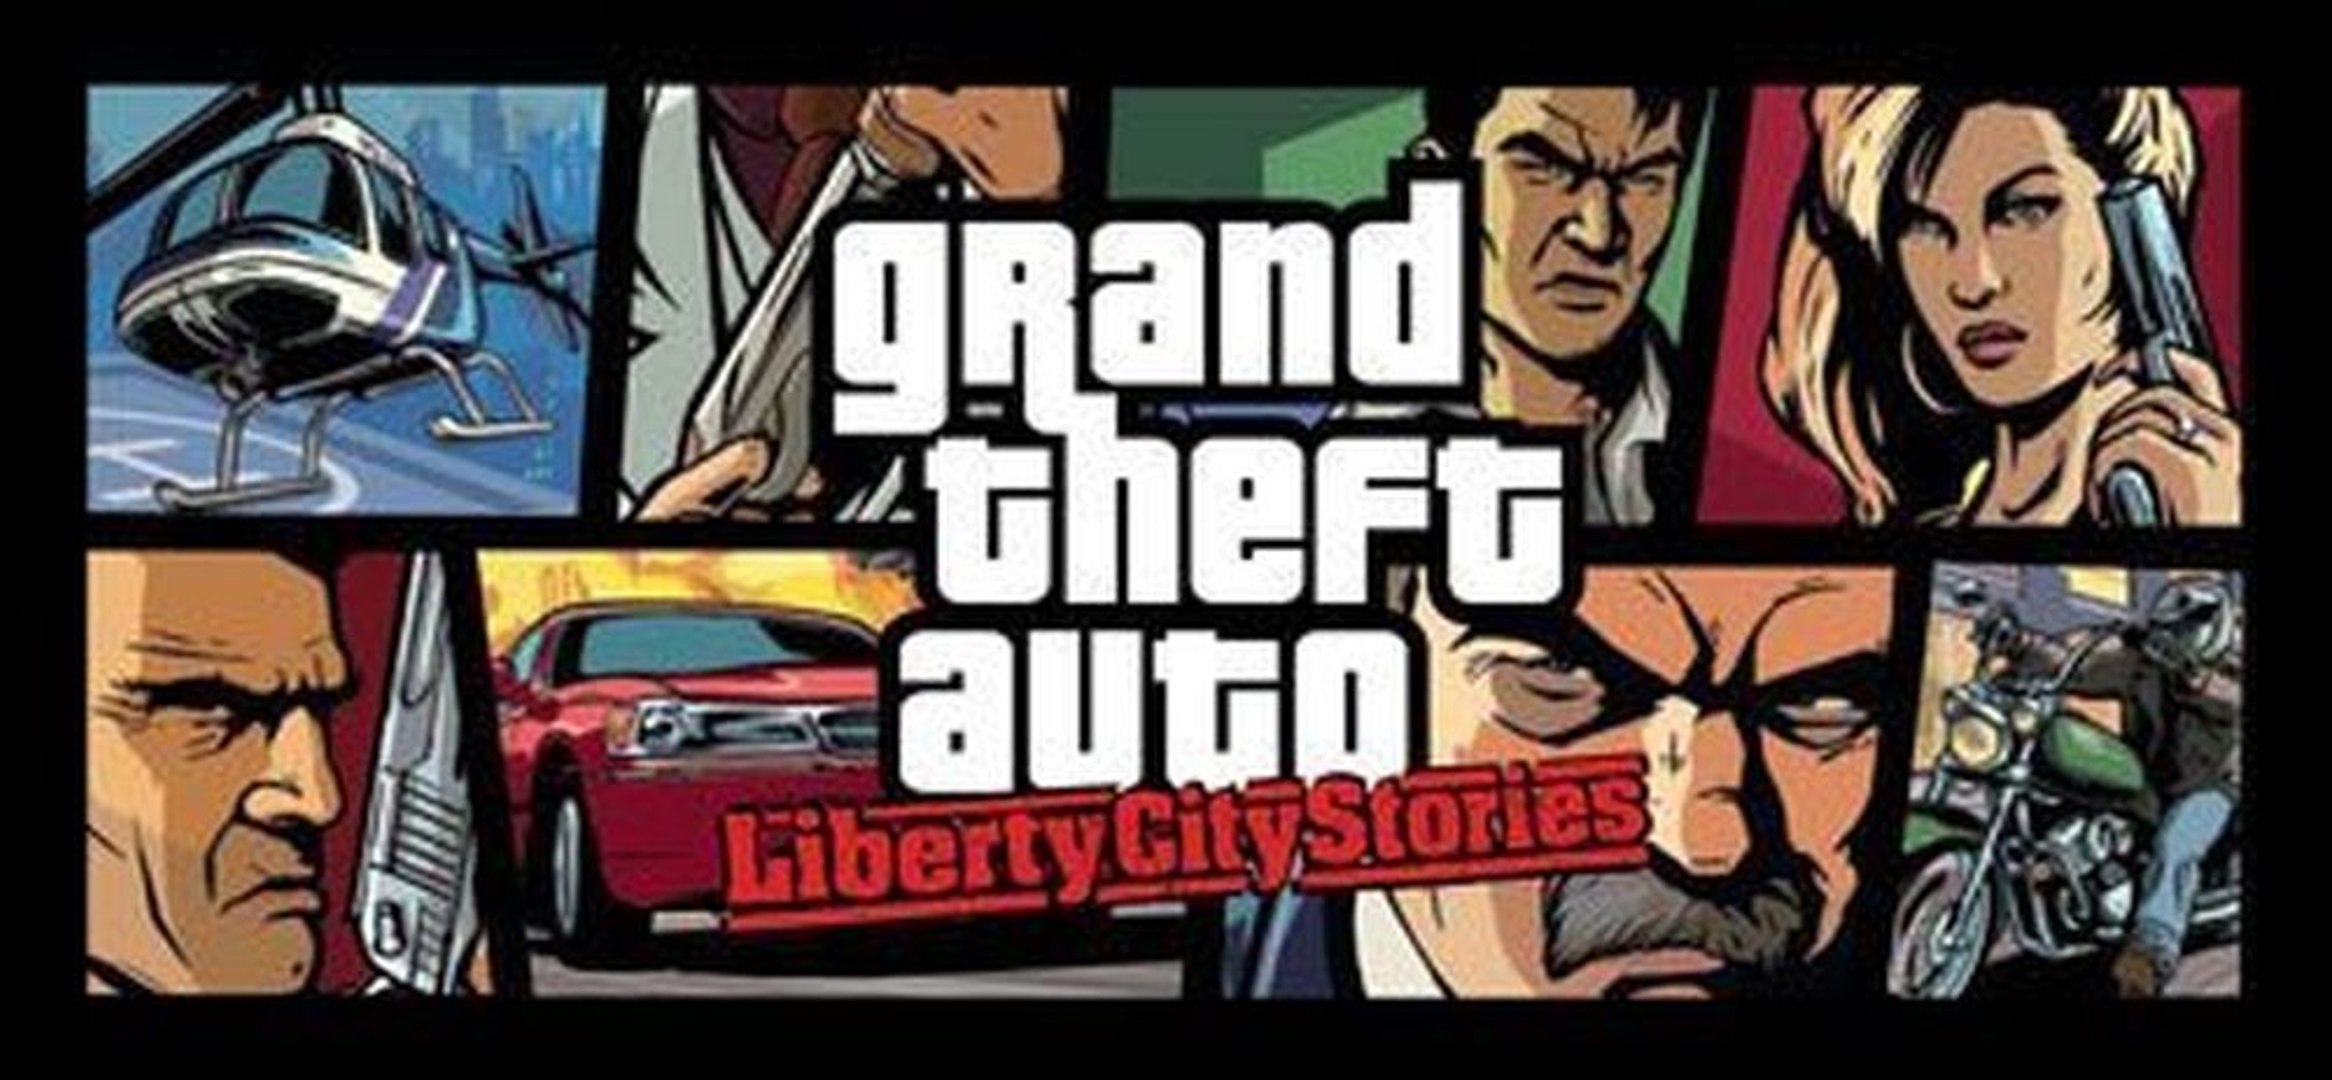 La oficina Vatio Sureste GTA: Liberty City Stories - Tráiler para PSP - Vídeo Dailymotion